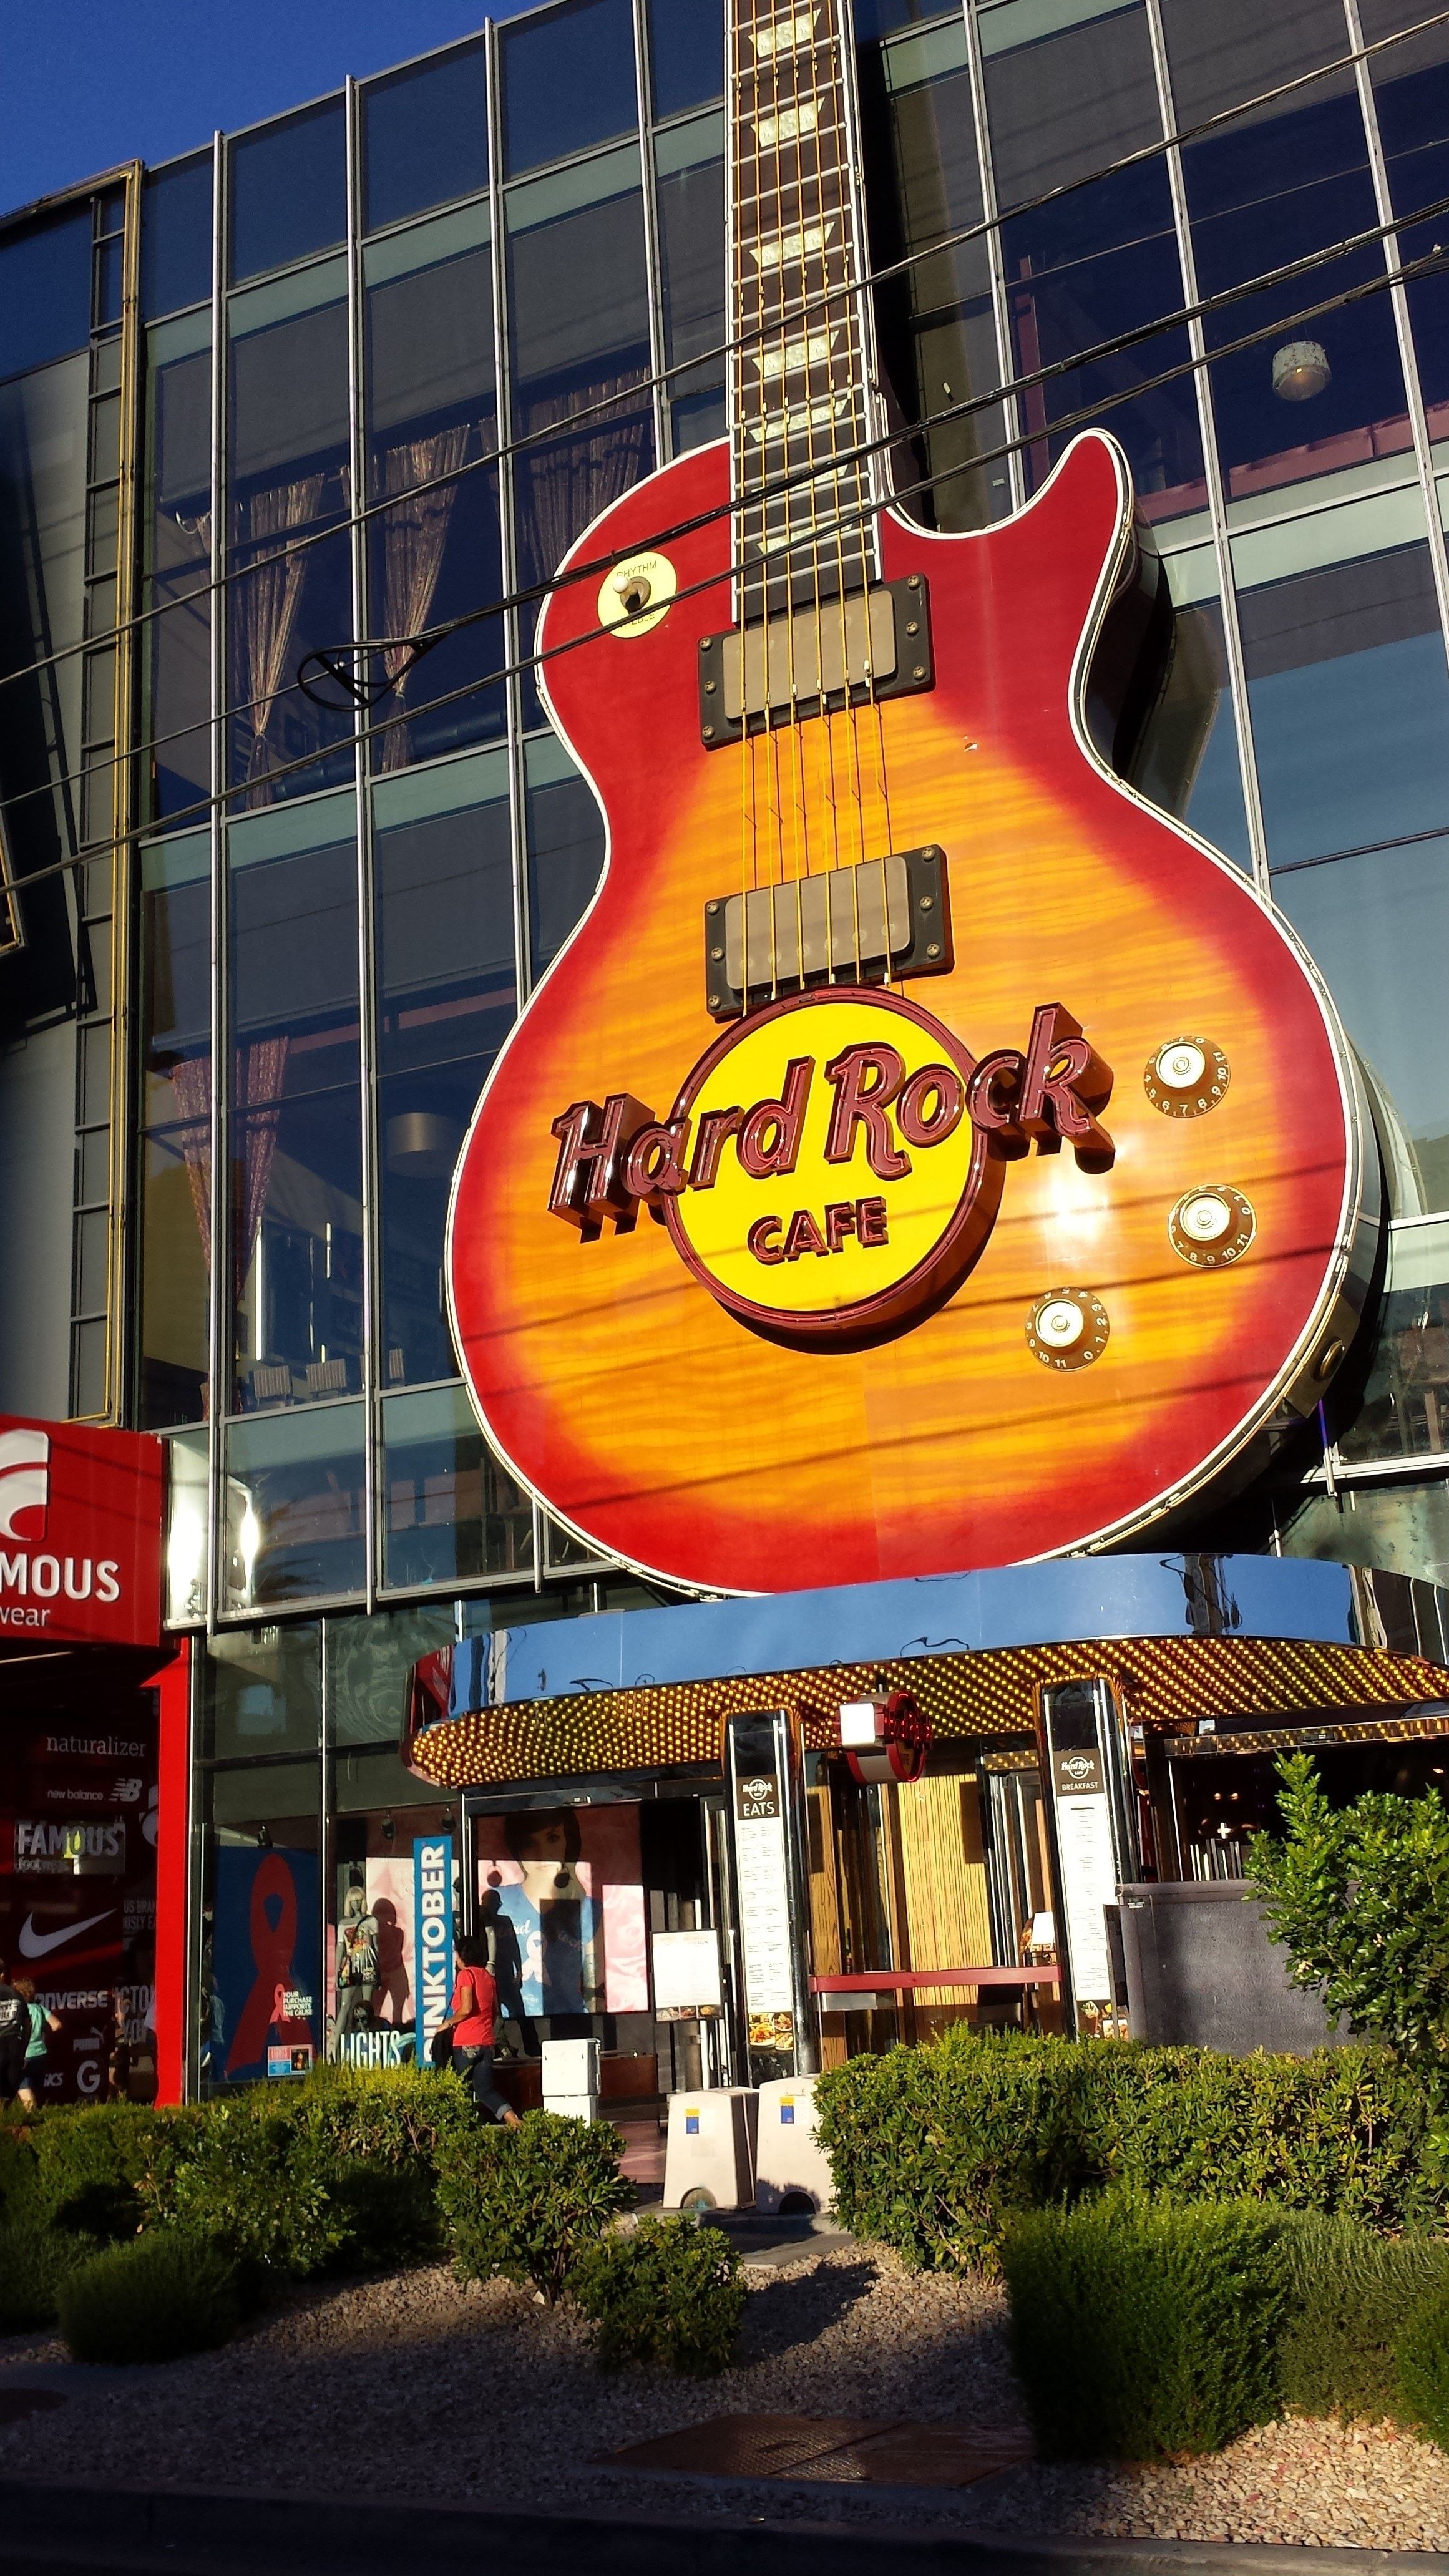 Hard Rock Cafe building free image